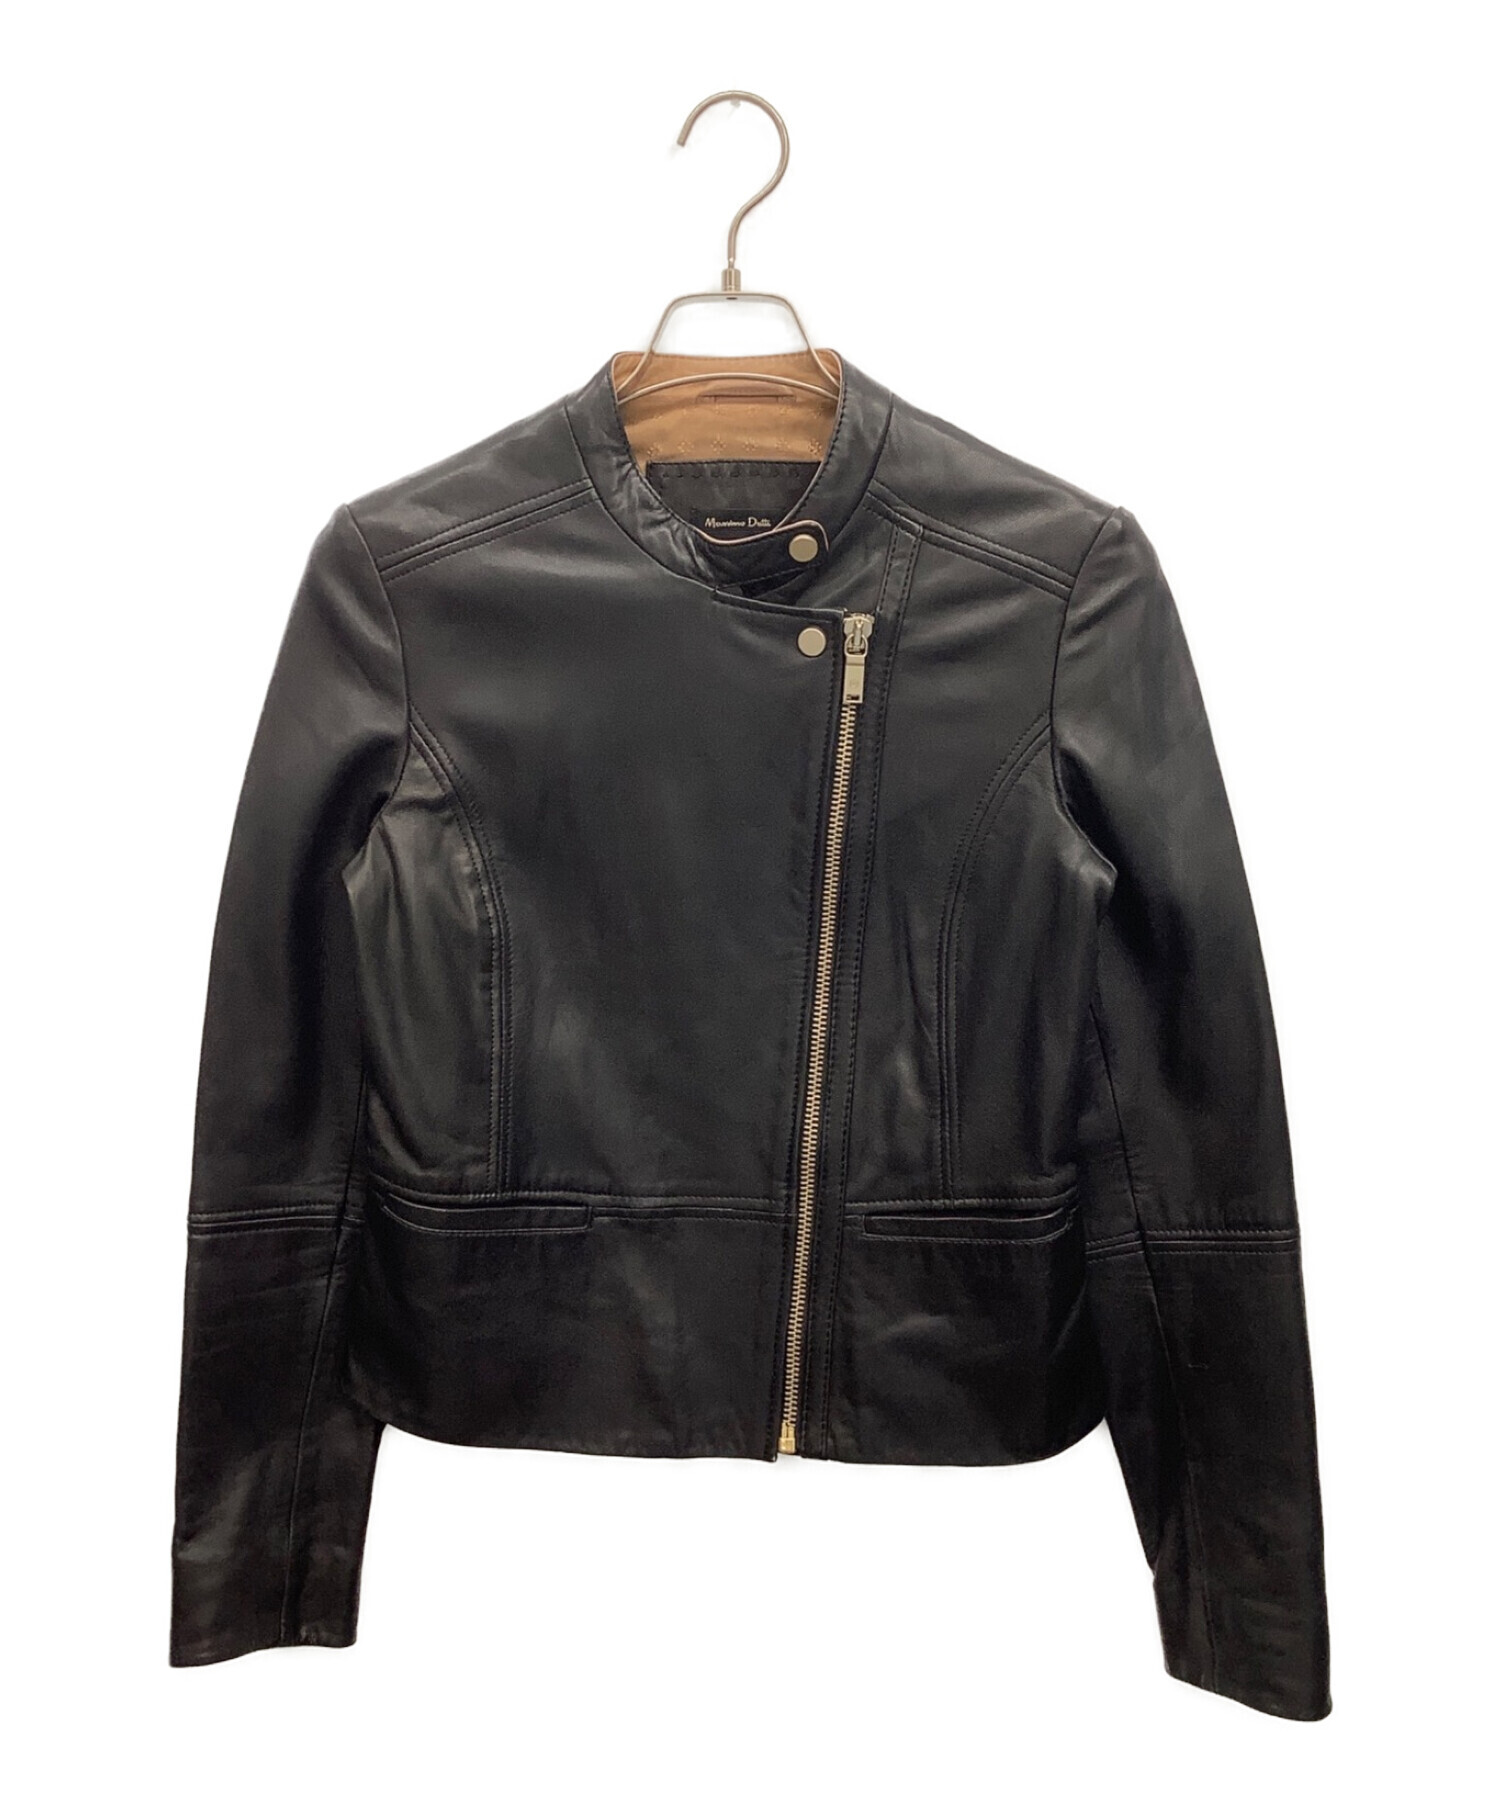 Massimo Dutti 本革ブラックジャケット身幅脇の横から50cm